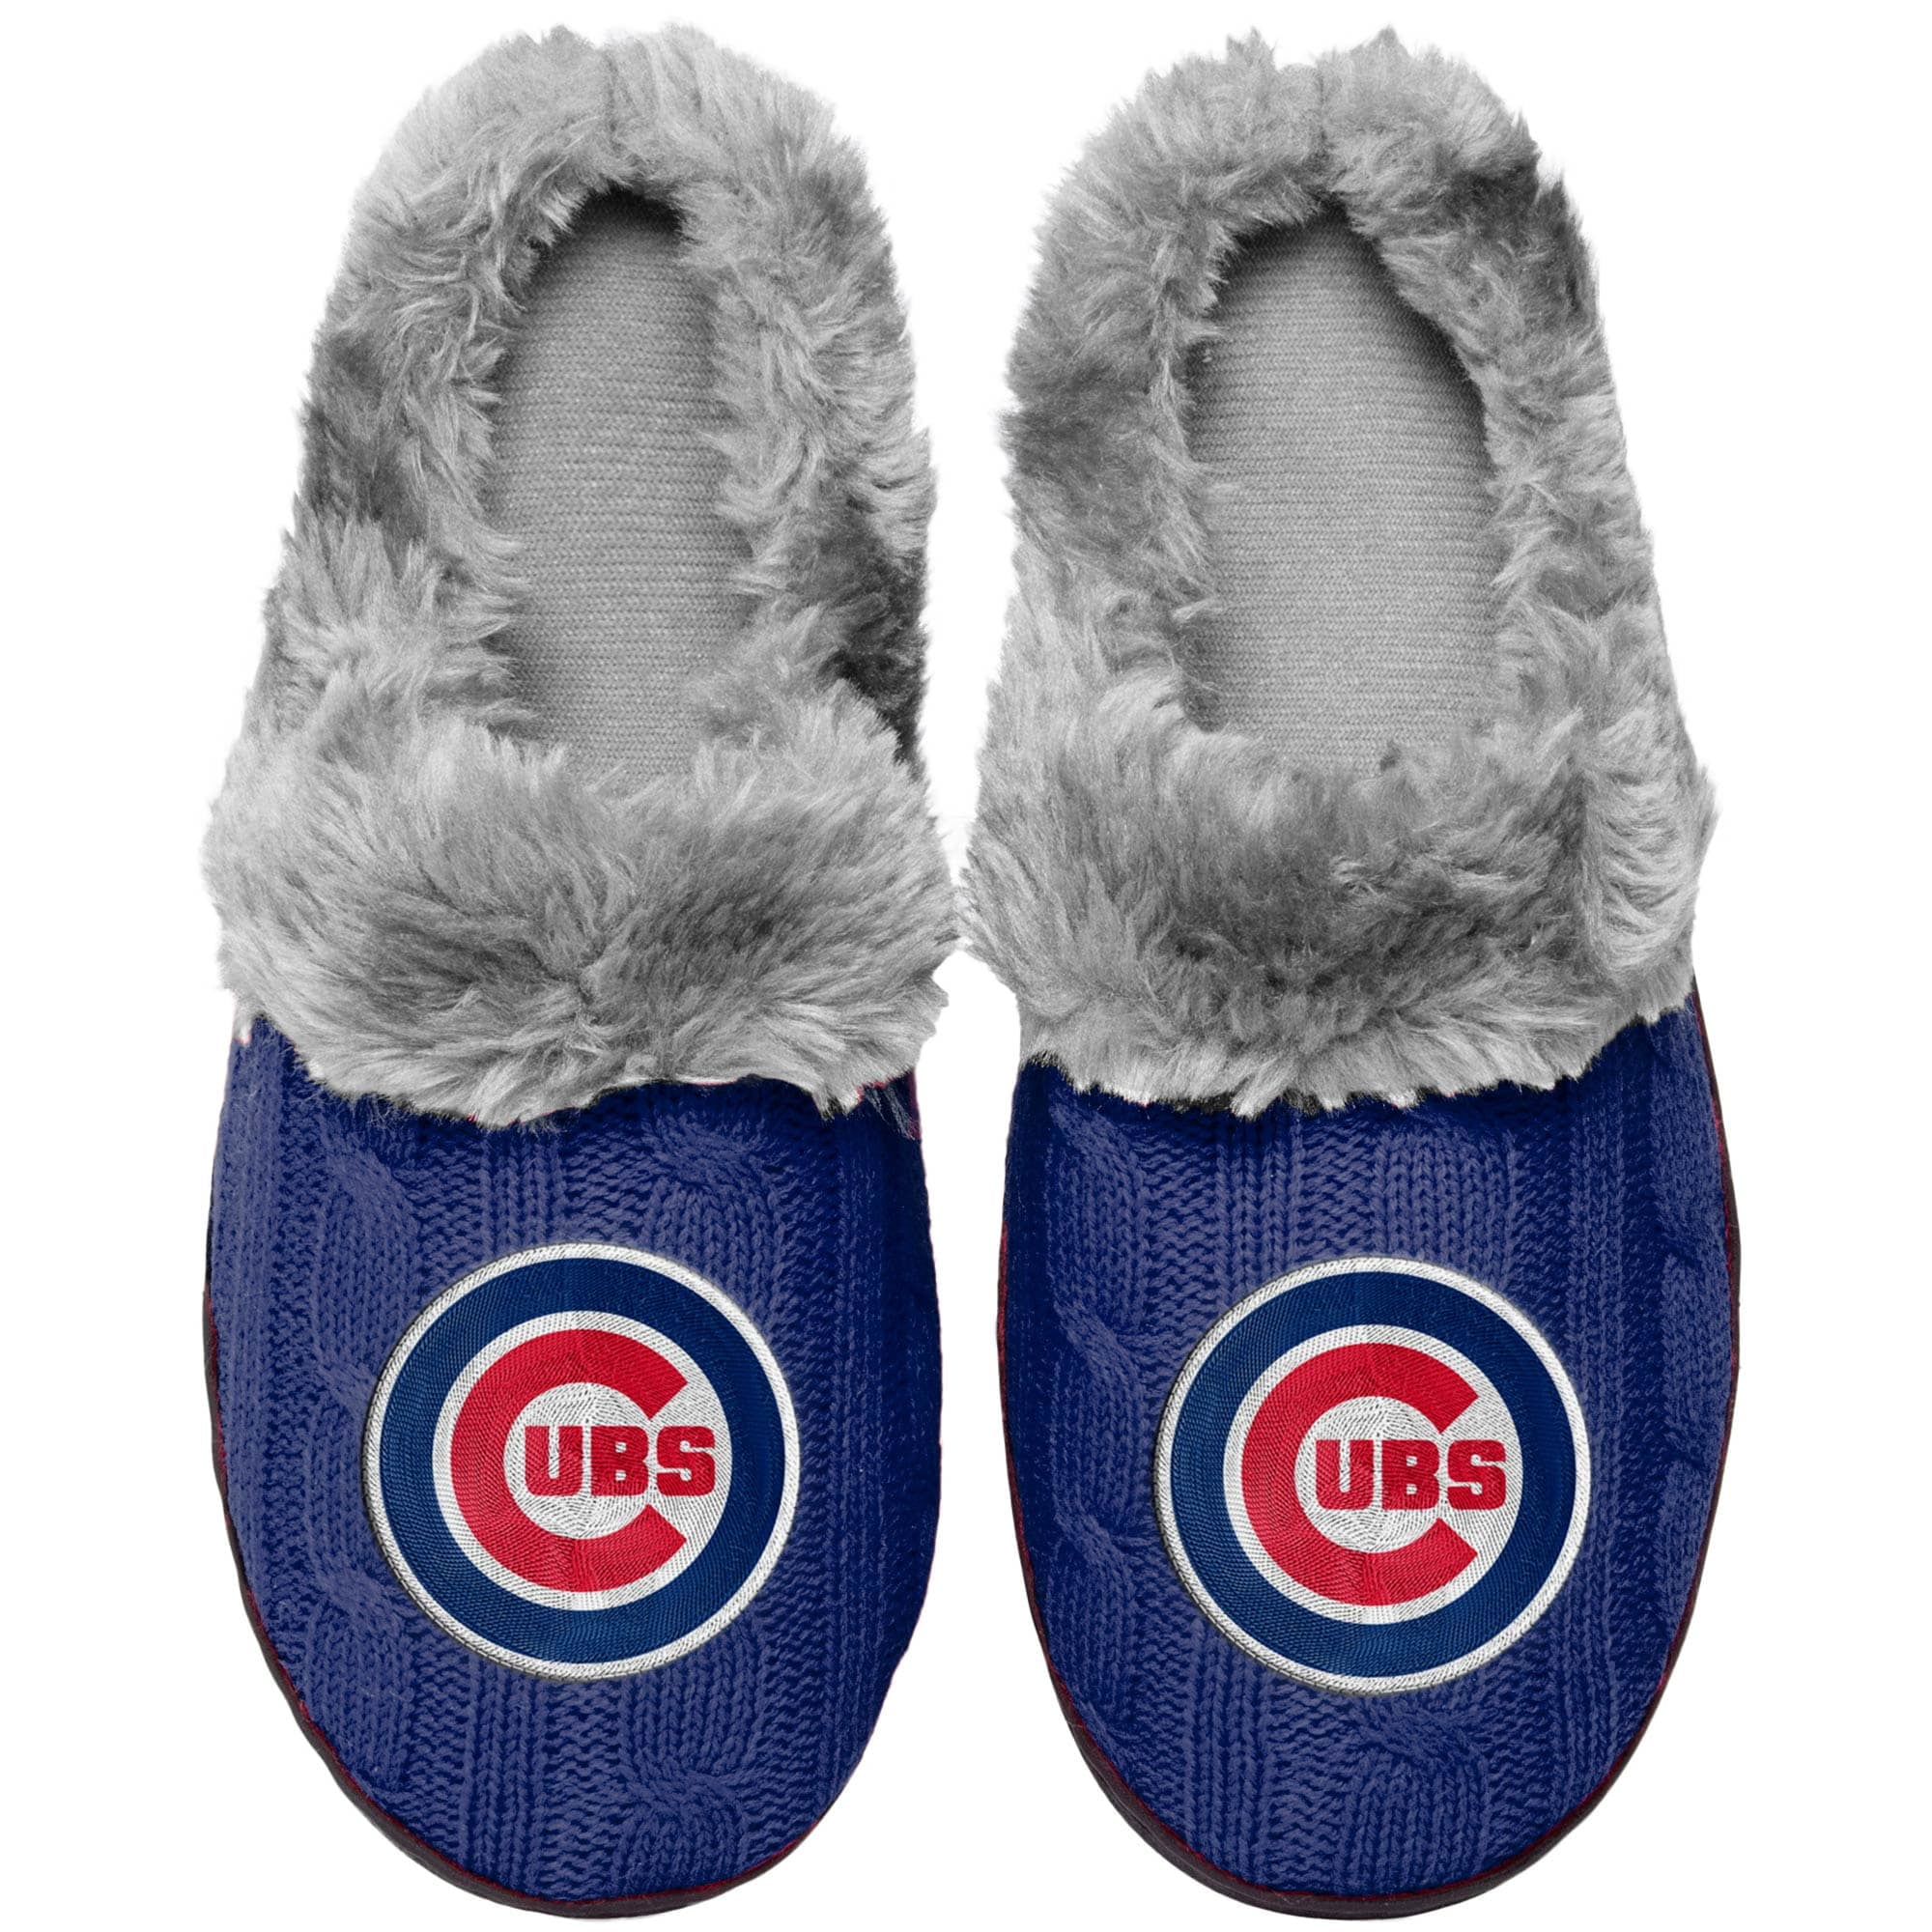 chicago bears slippers walmart